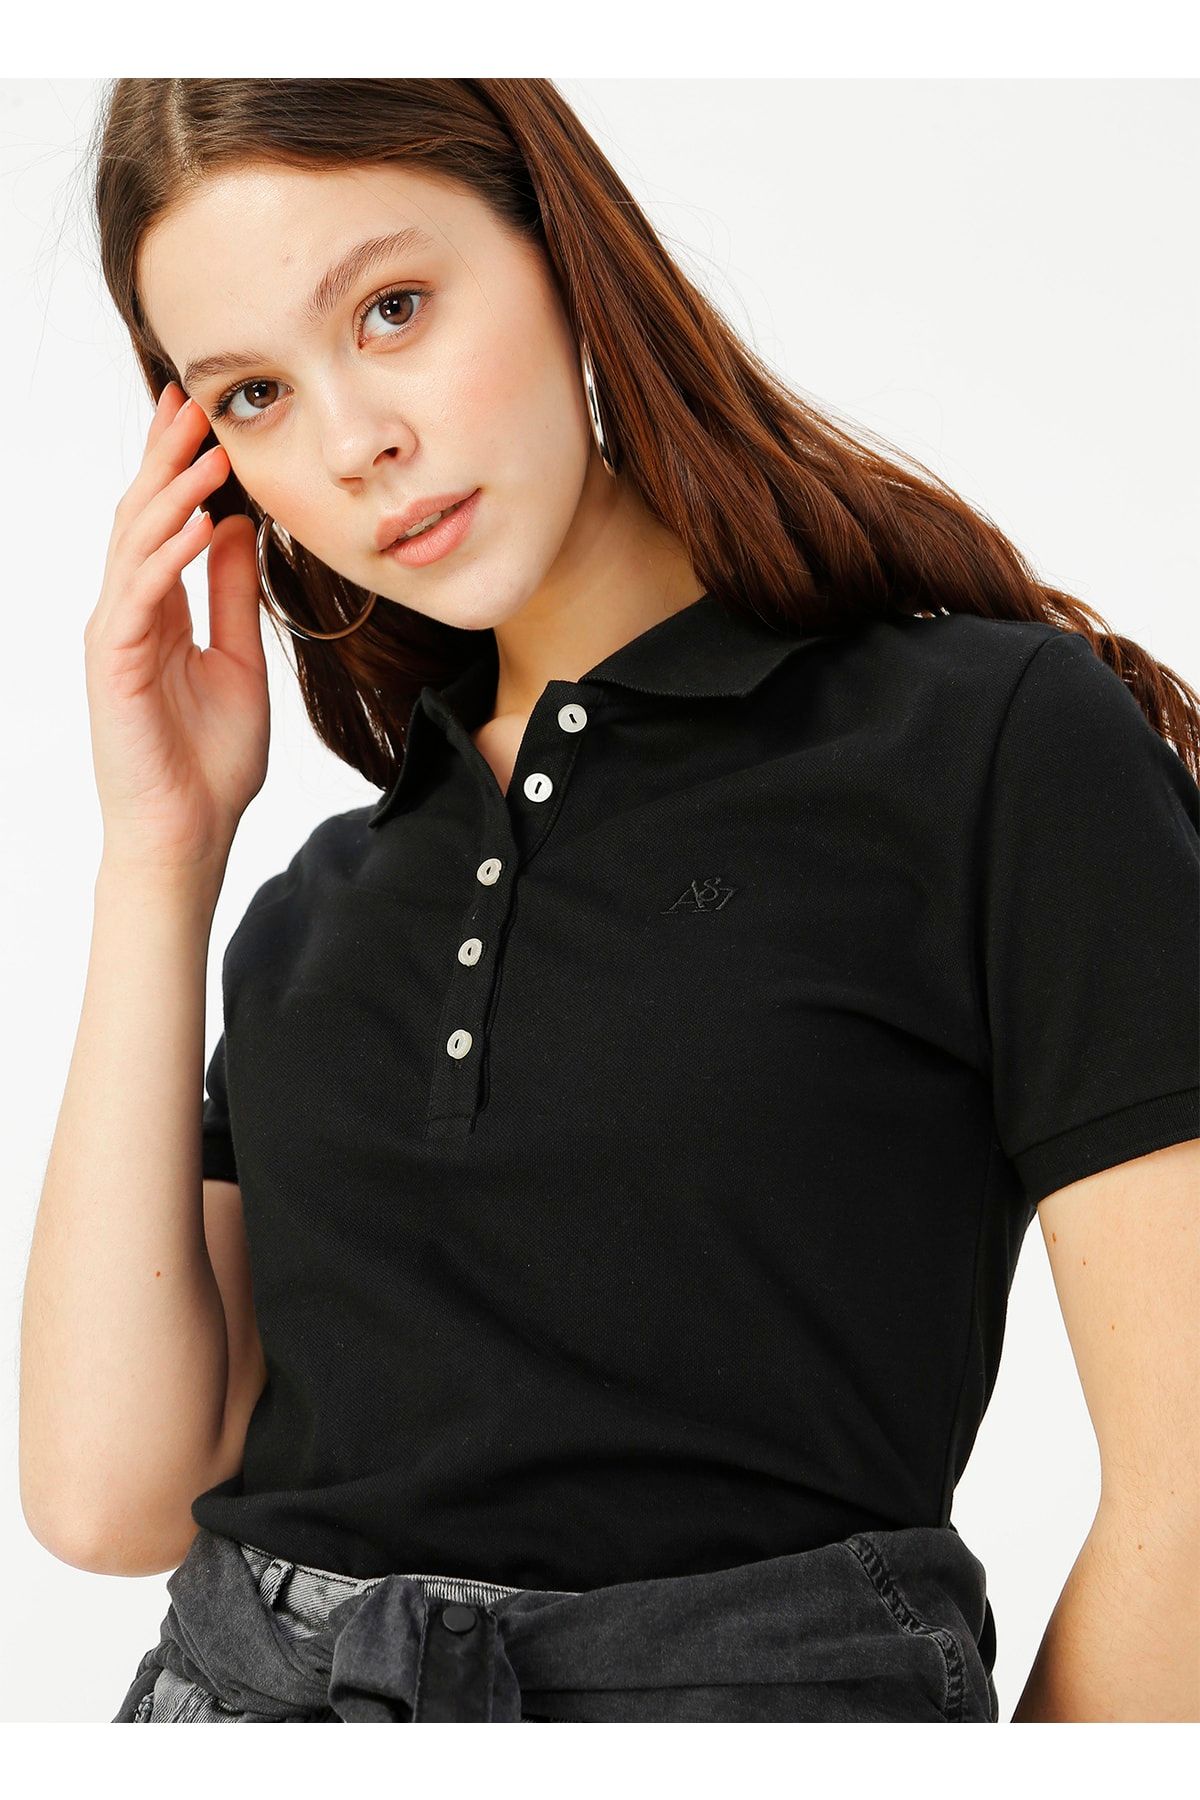 Aeropostale Kadın Siyah Düğme Detaylı Polo Yaka T-shirt